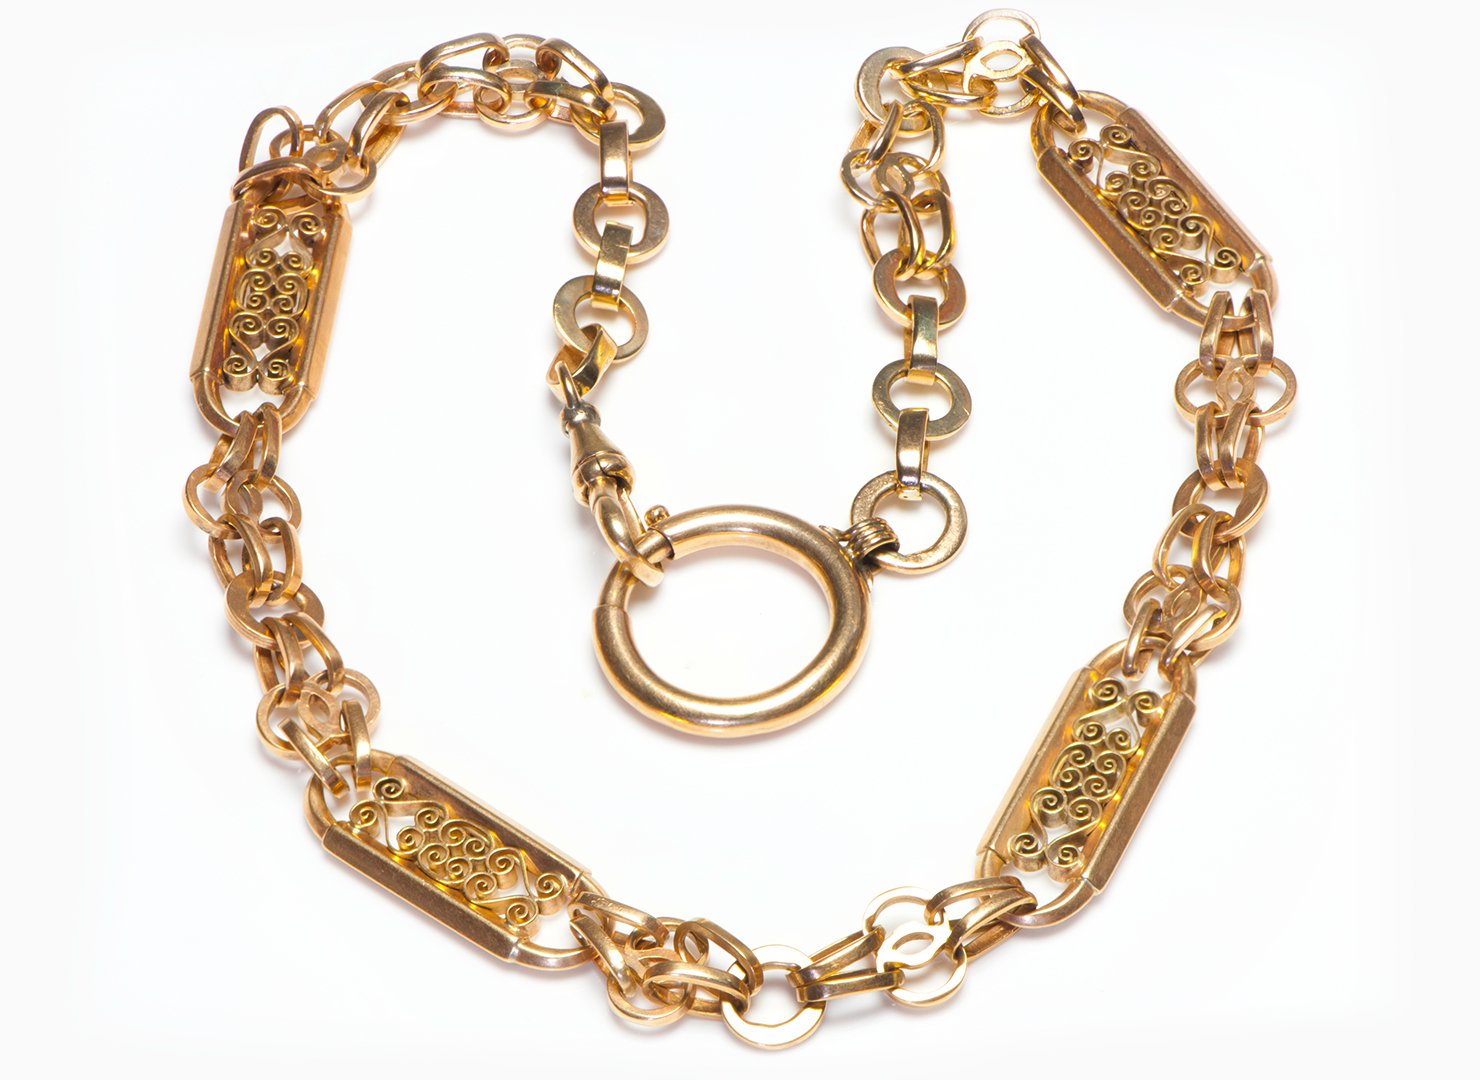 Antique Gold Pierced Panels Watch Chain Necklace